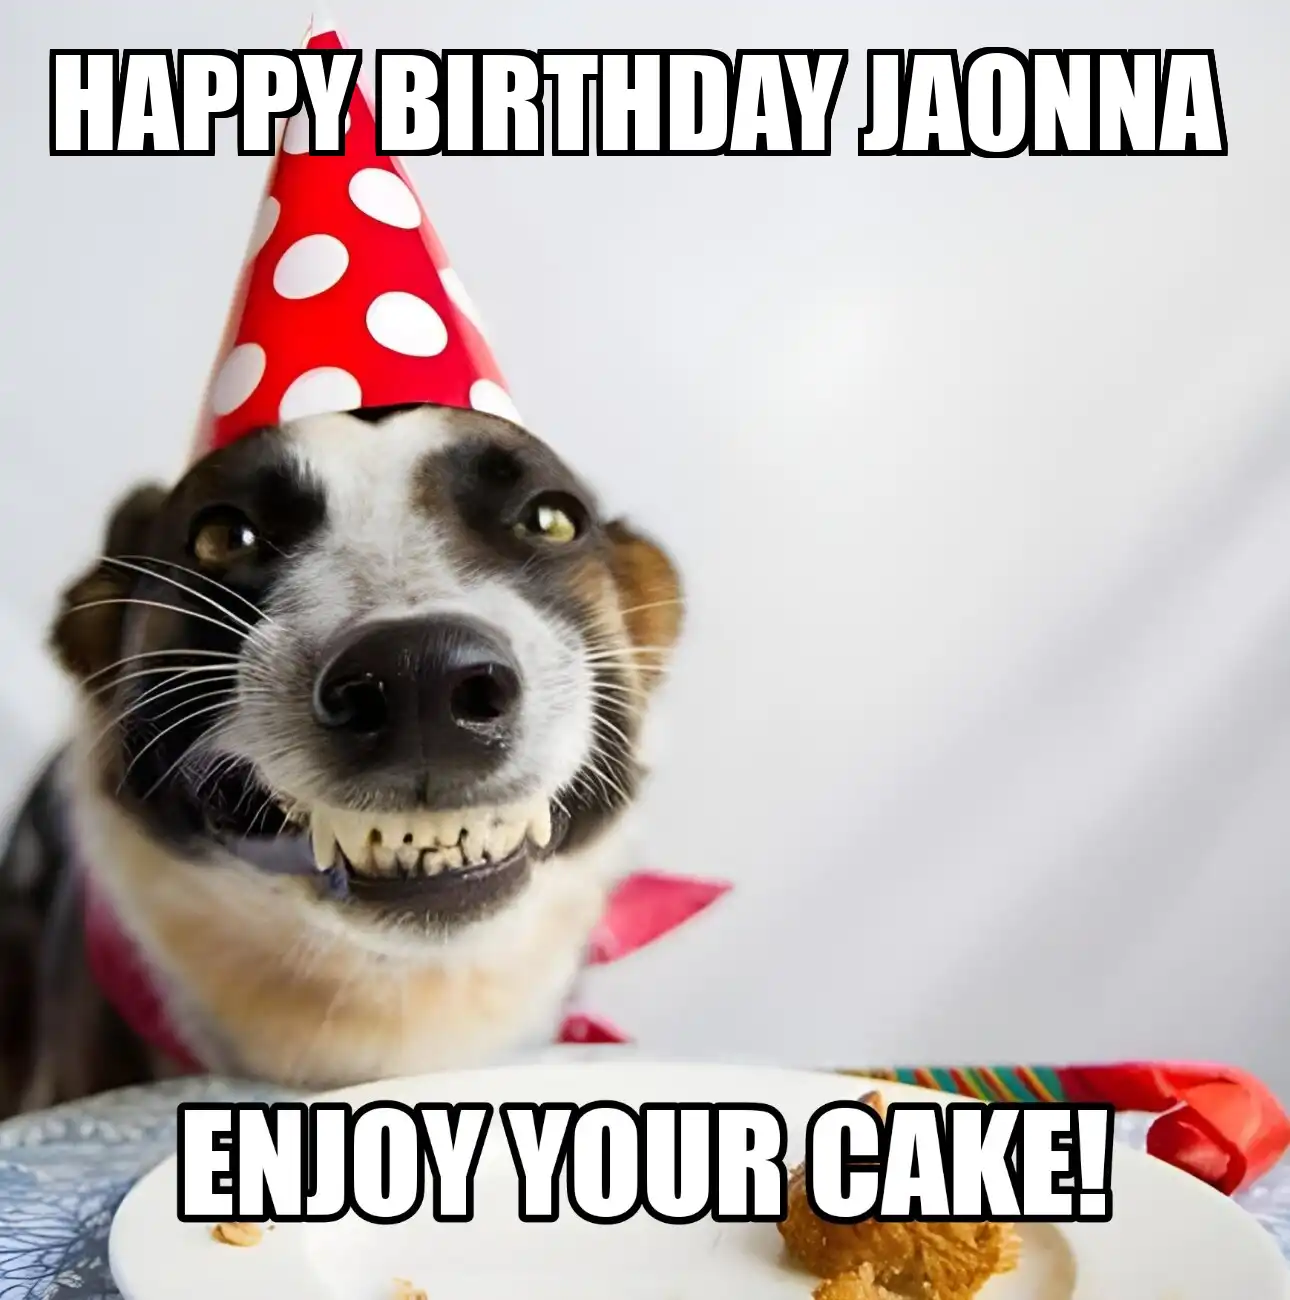 Happy Birthday Jaonna Enjoy Your Cake Dog Meme